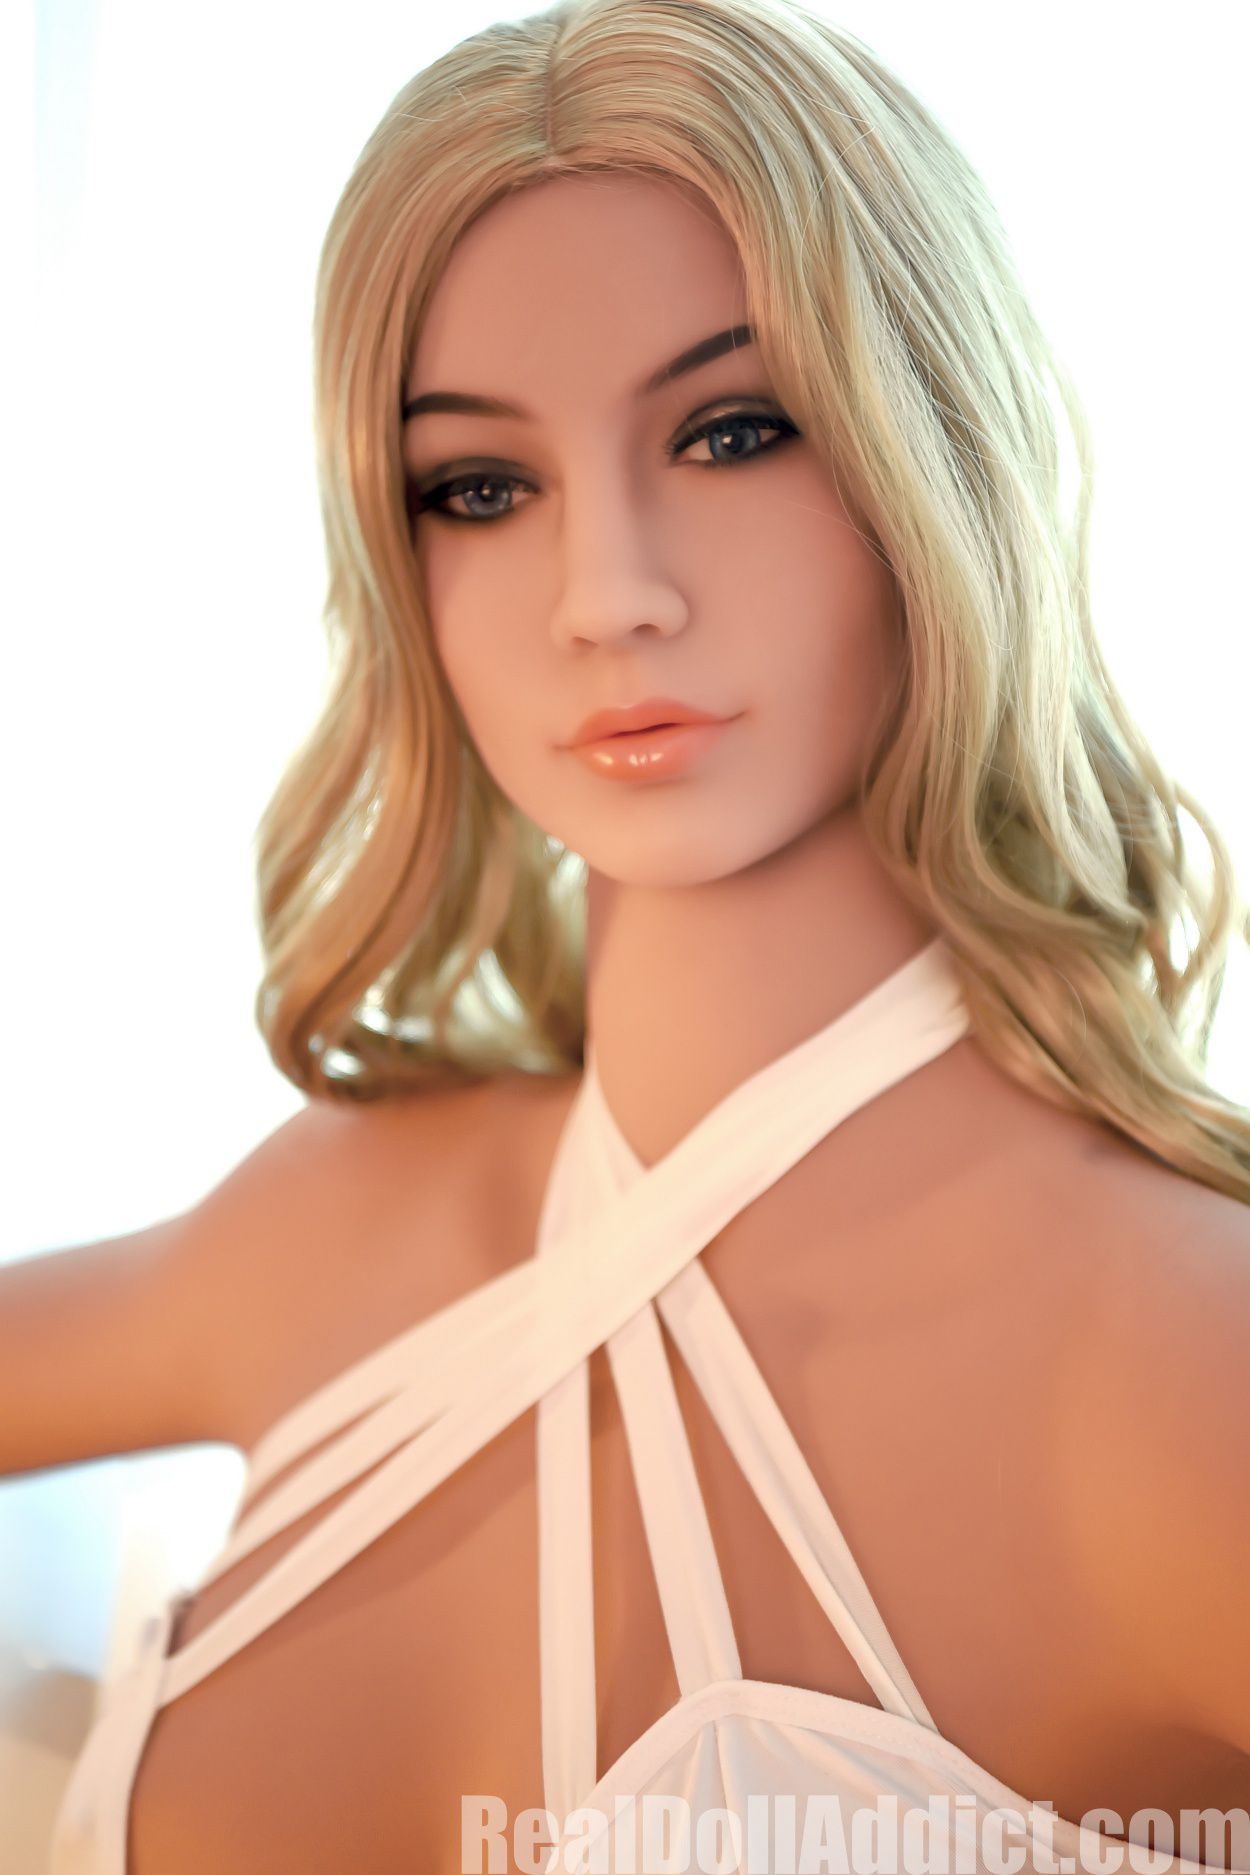 Fatal Beauty _ Real Doll Addict, Sex Doll Blog 21